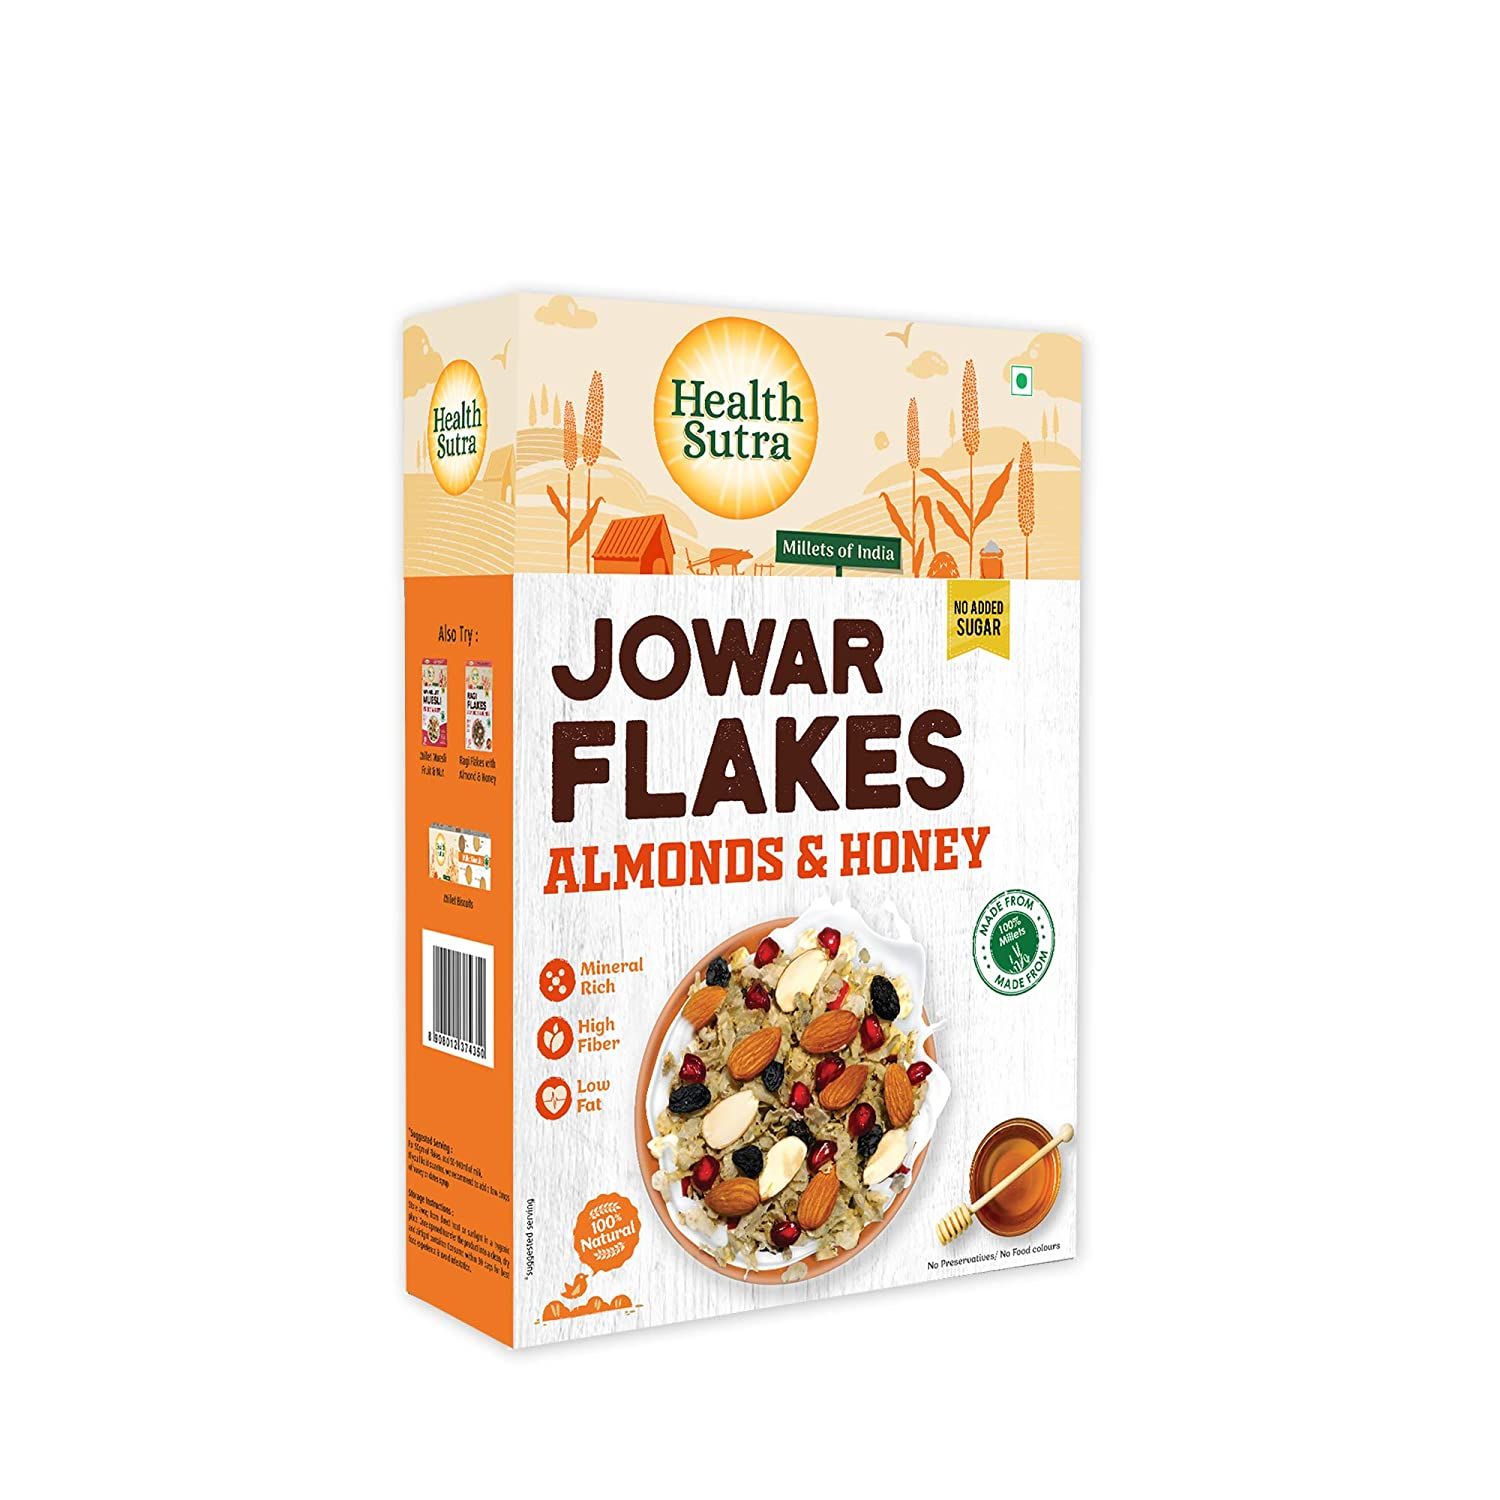 Health Sutra Jowar Flakes Almond & Honey Image